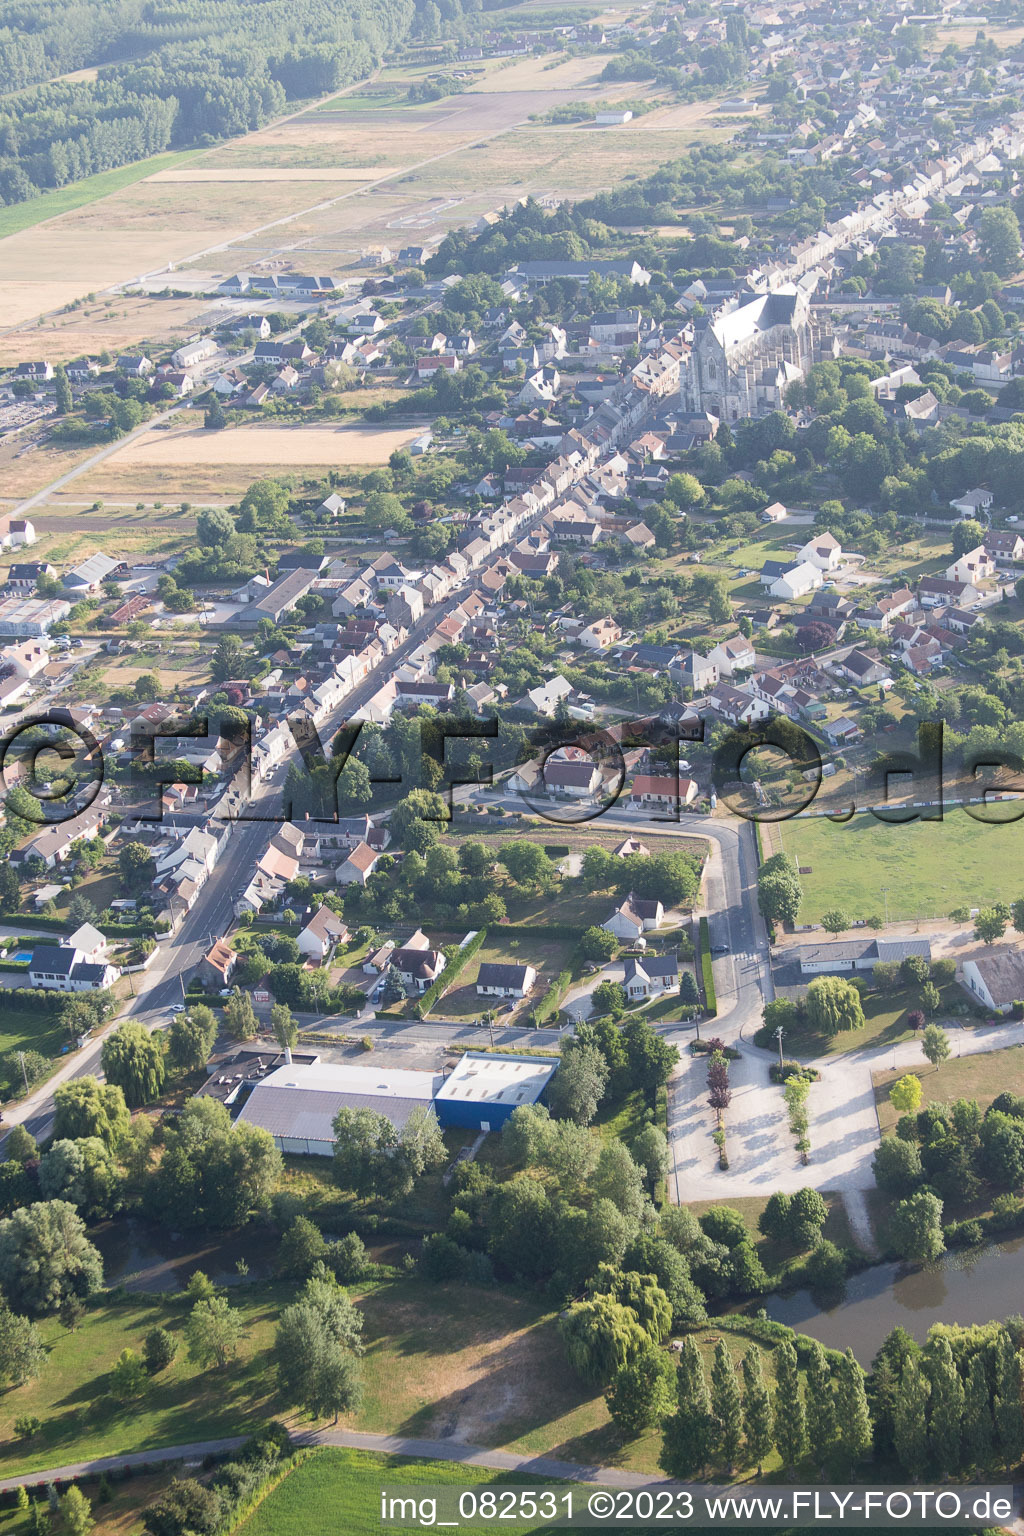 Luftbild von Cléry-Saint-André im Bundesland Loiret, Frankreich